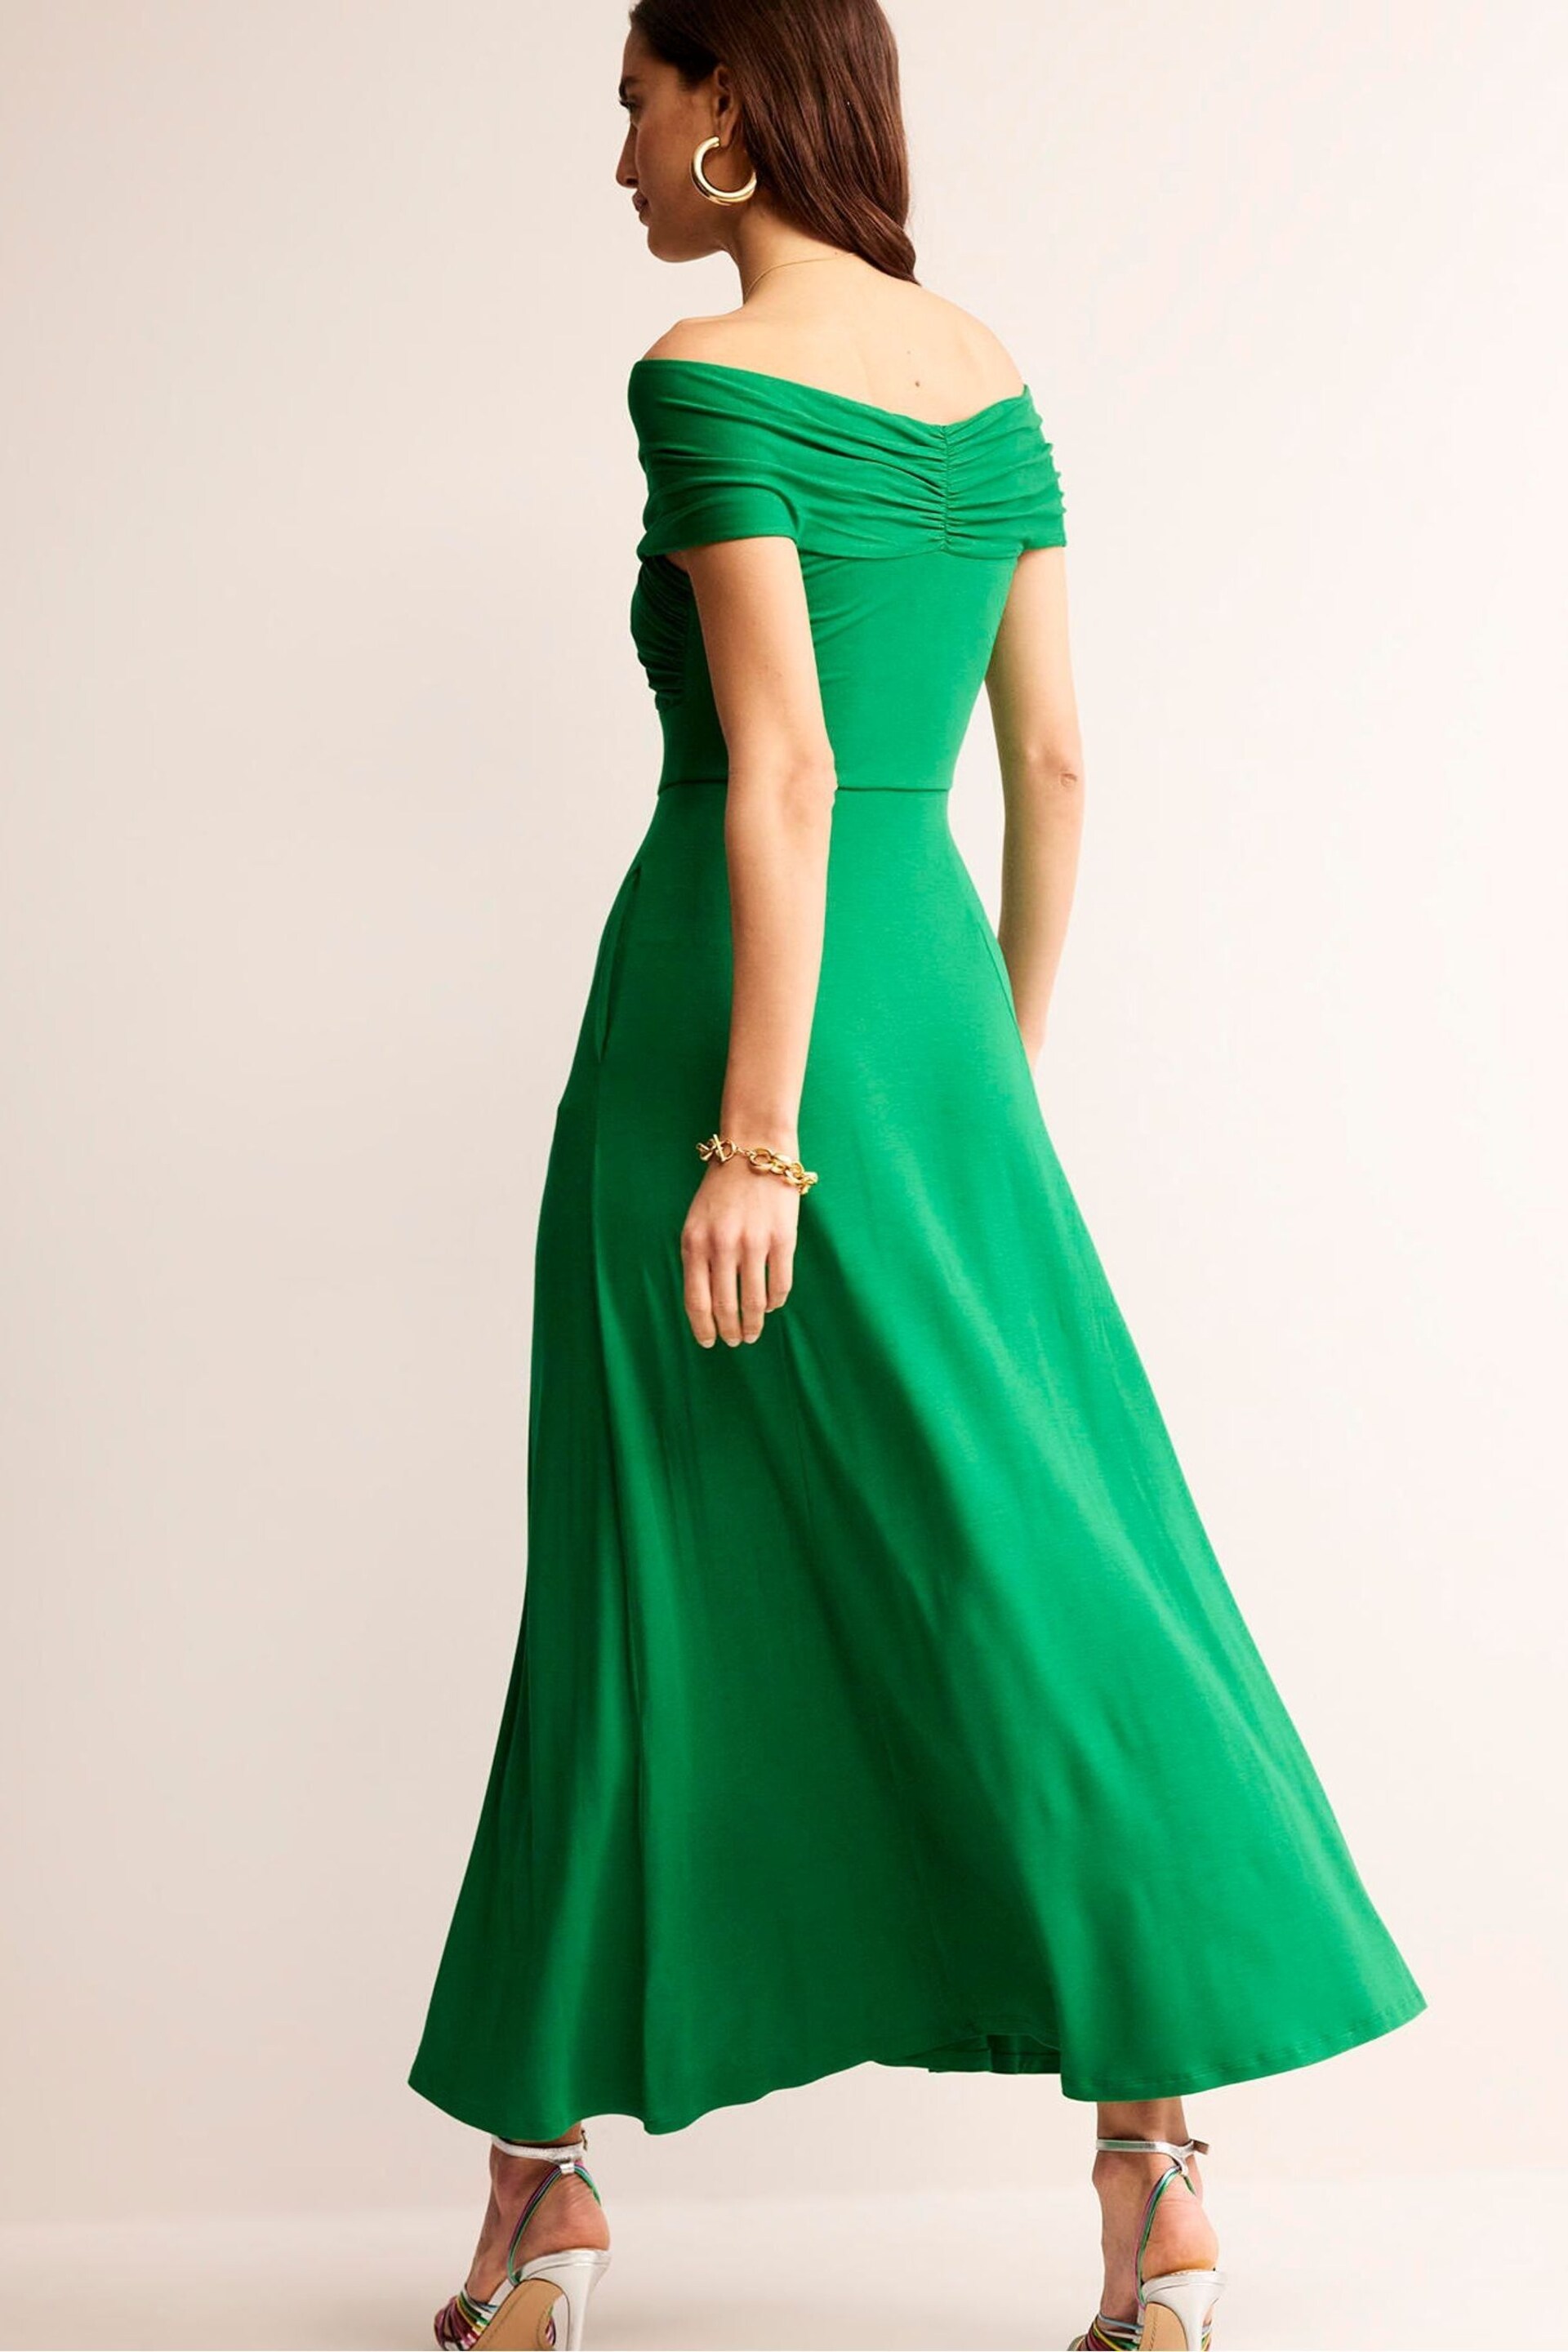 Boden Green Bardot Jersey Maxi Dress - Image 2 of 5